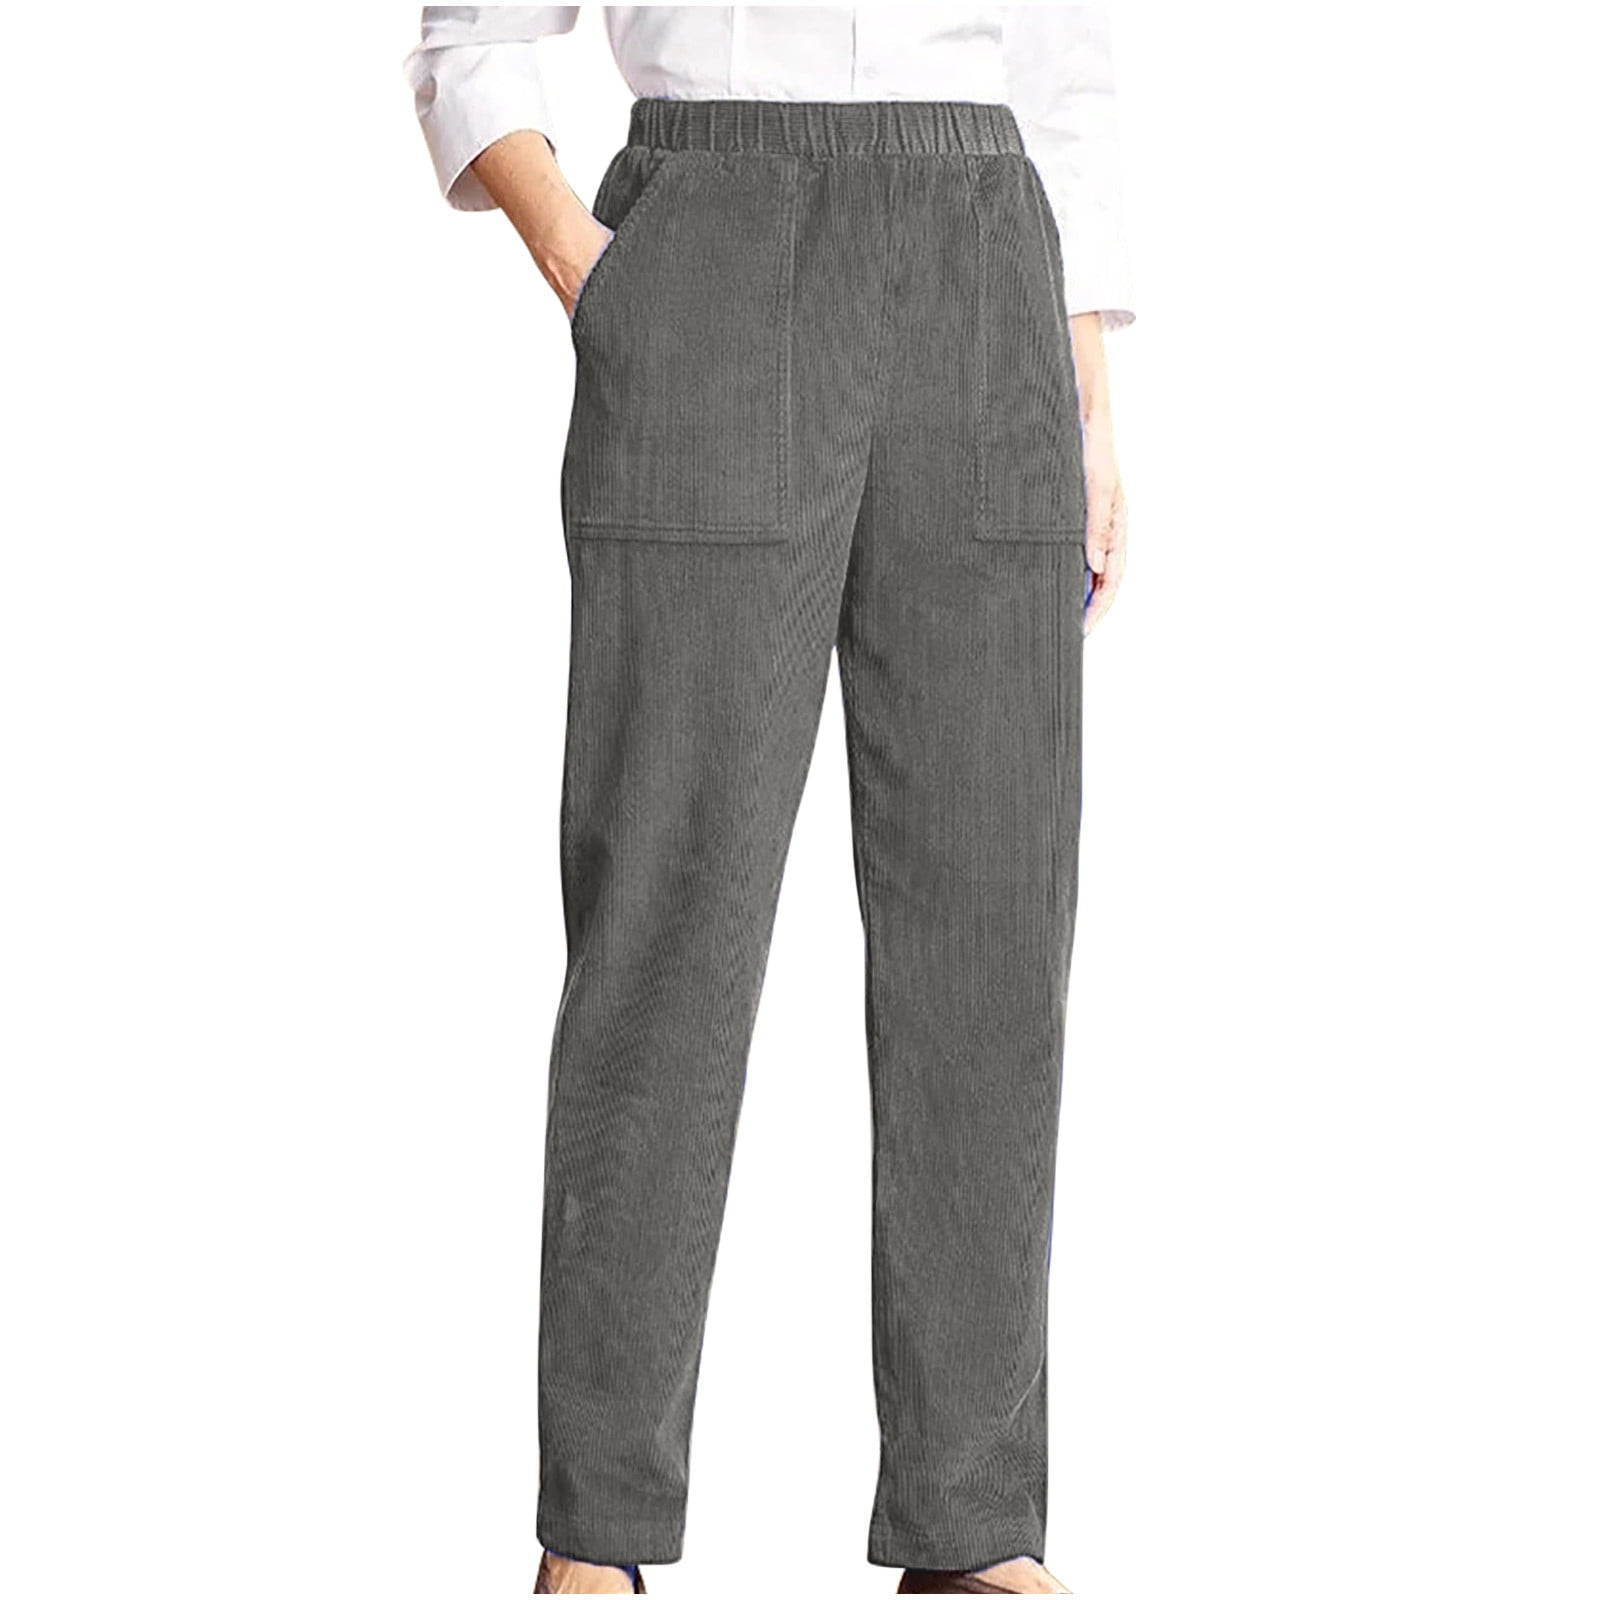 SUMDUINO Womens Pants Plus Size Clearance Women's Solid Pocket Corduroy ...